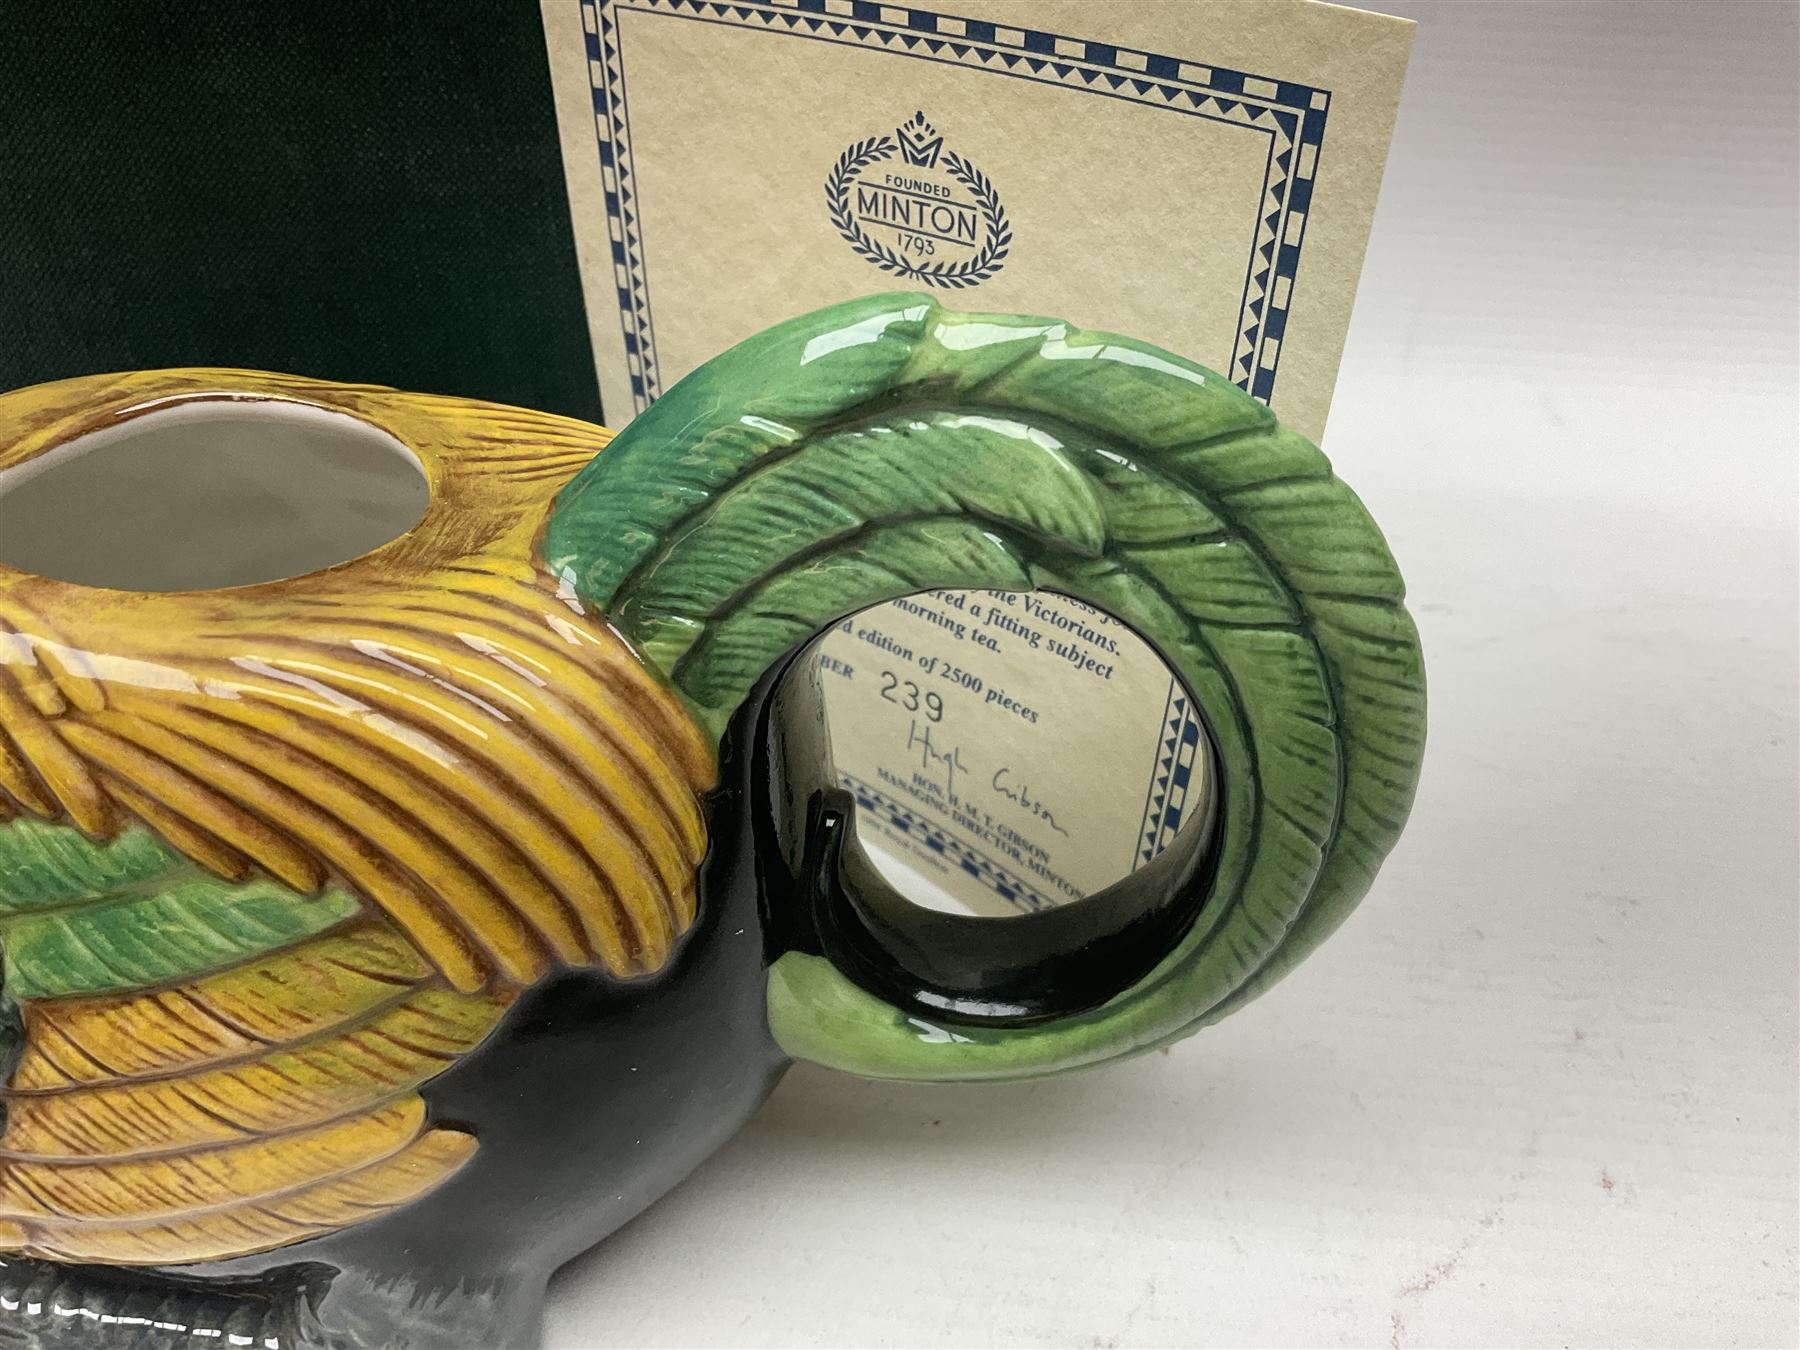 Minton Archive collection cockerel teapot - Image 8 of 12